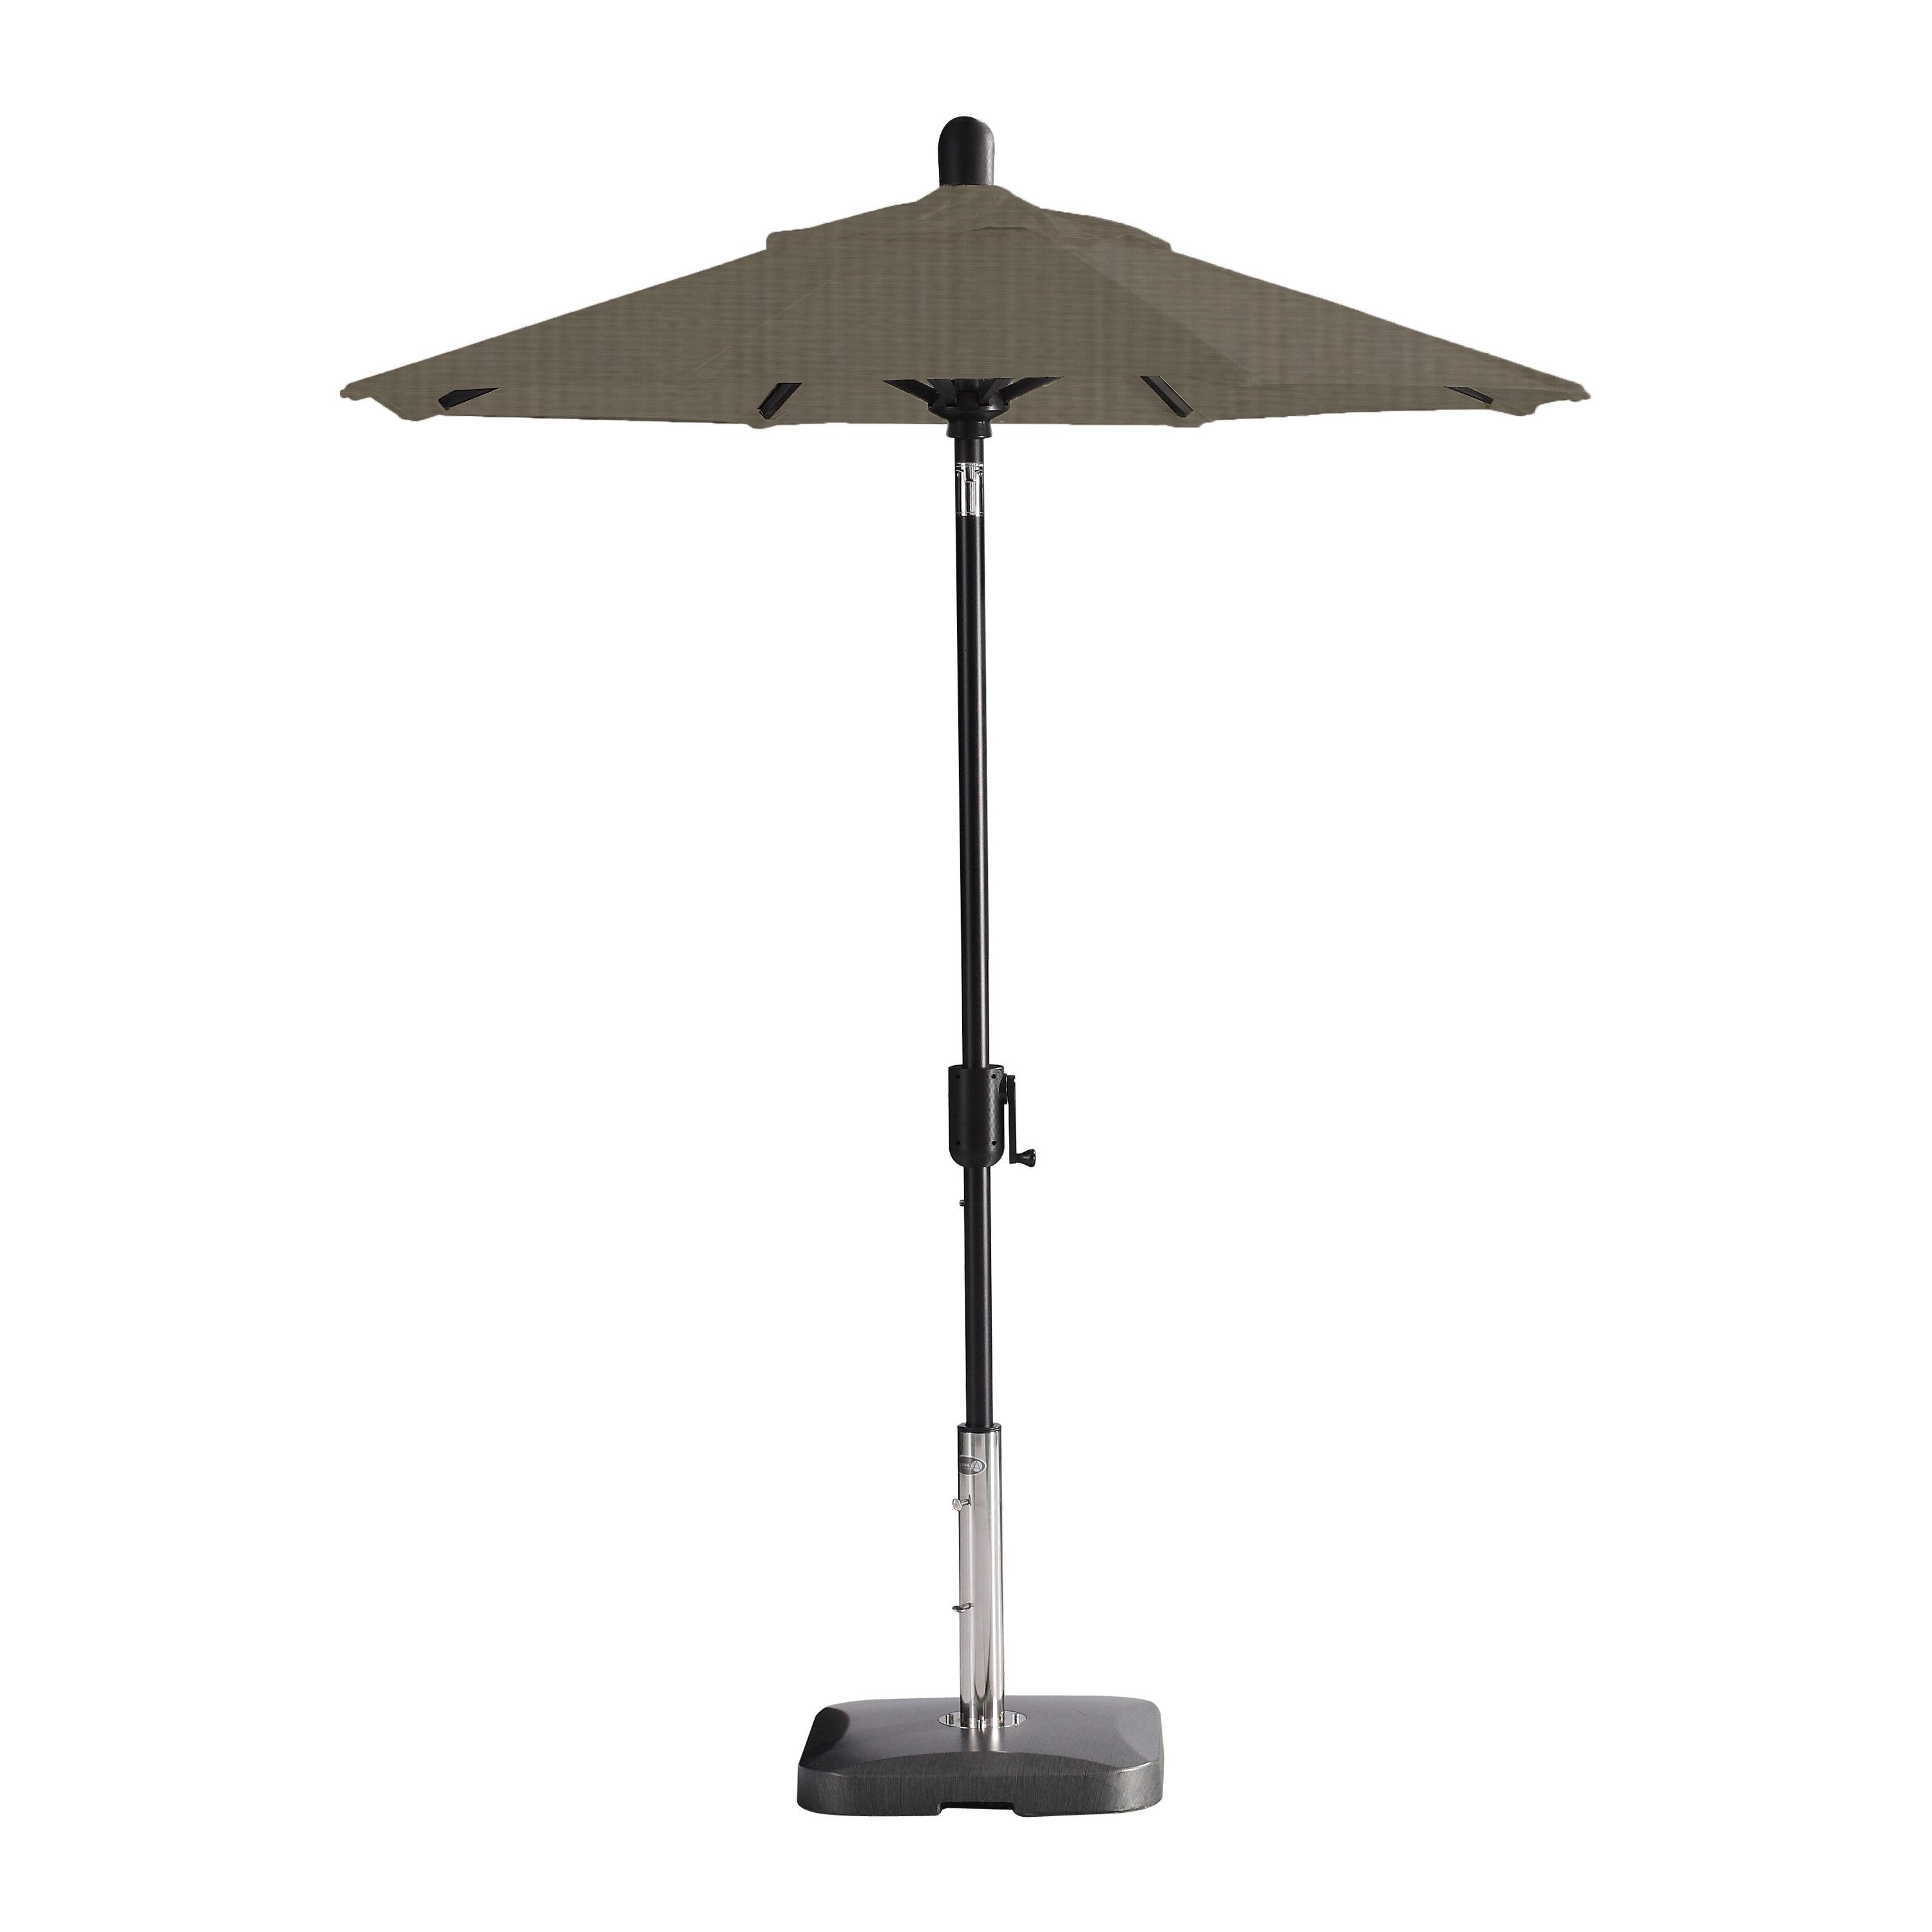 Wieczorek Auto Tilt 6' Market Sunbrella Umbrella Pertaining To Fashionable Julian Market Sunbrella Umbrellas (View 5 of 20)